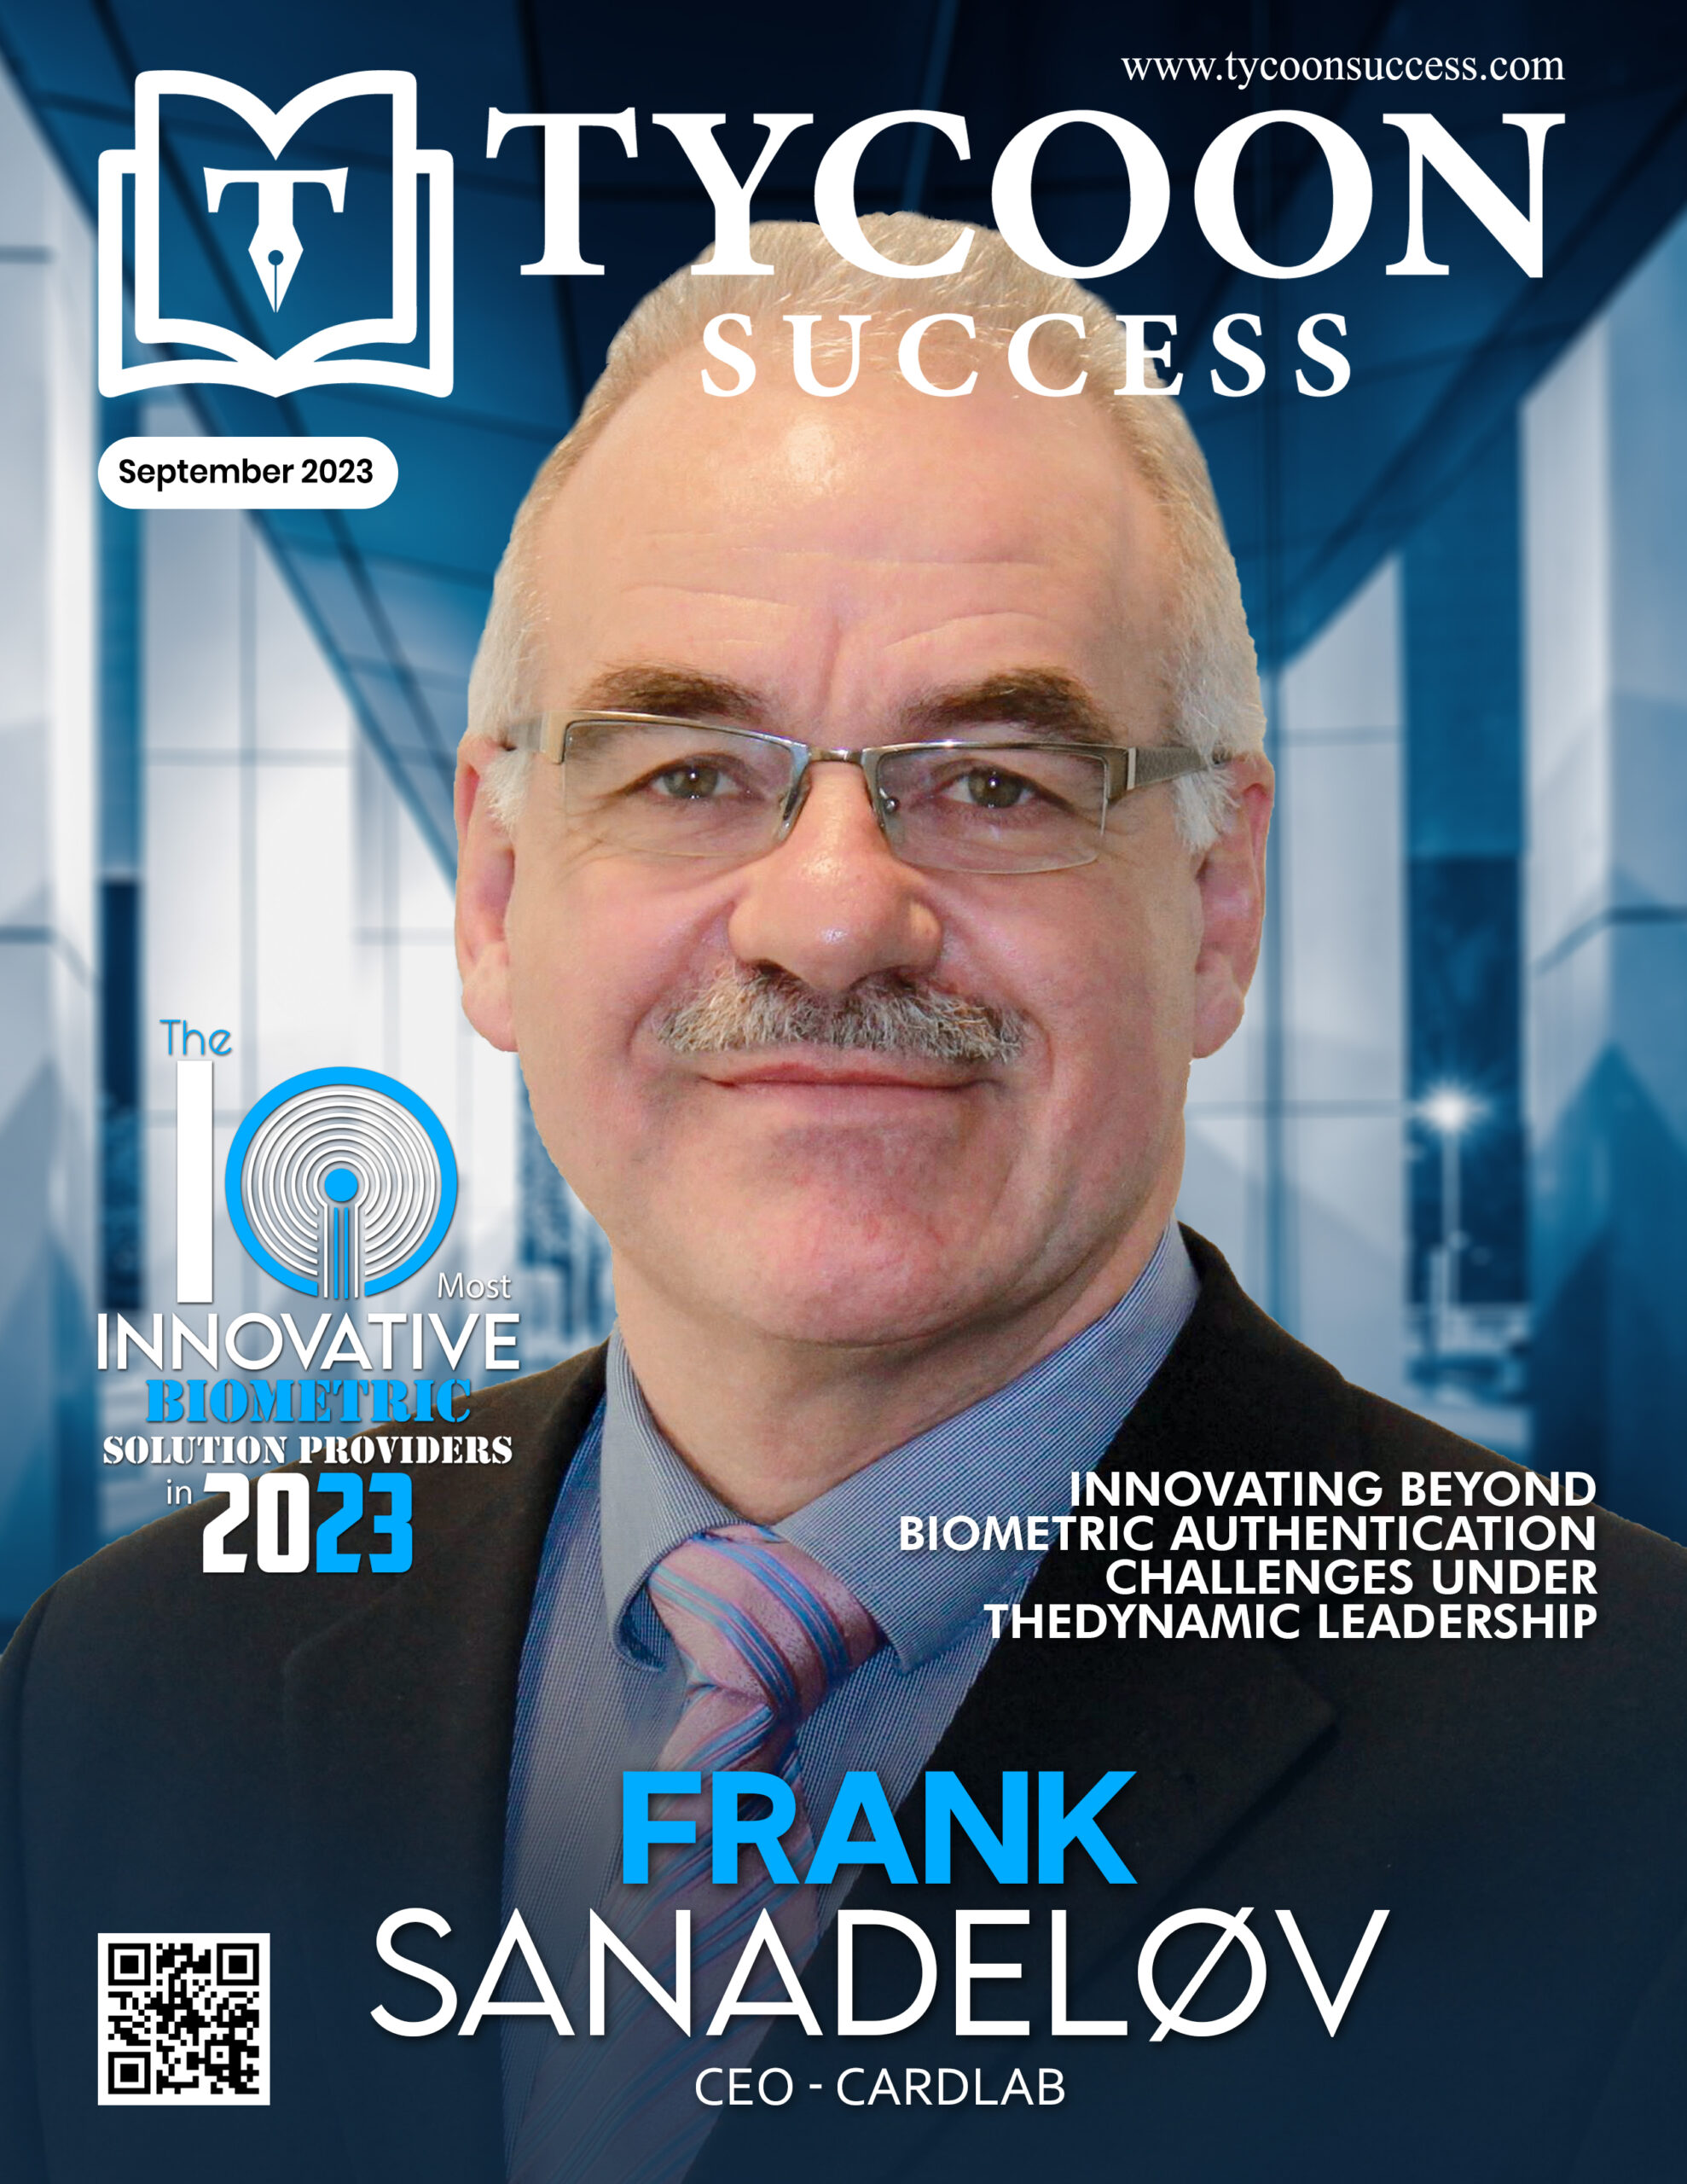 Frank Sandeløv | CEO | CardLab | Tycoon Success Magazine